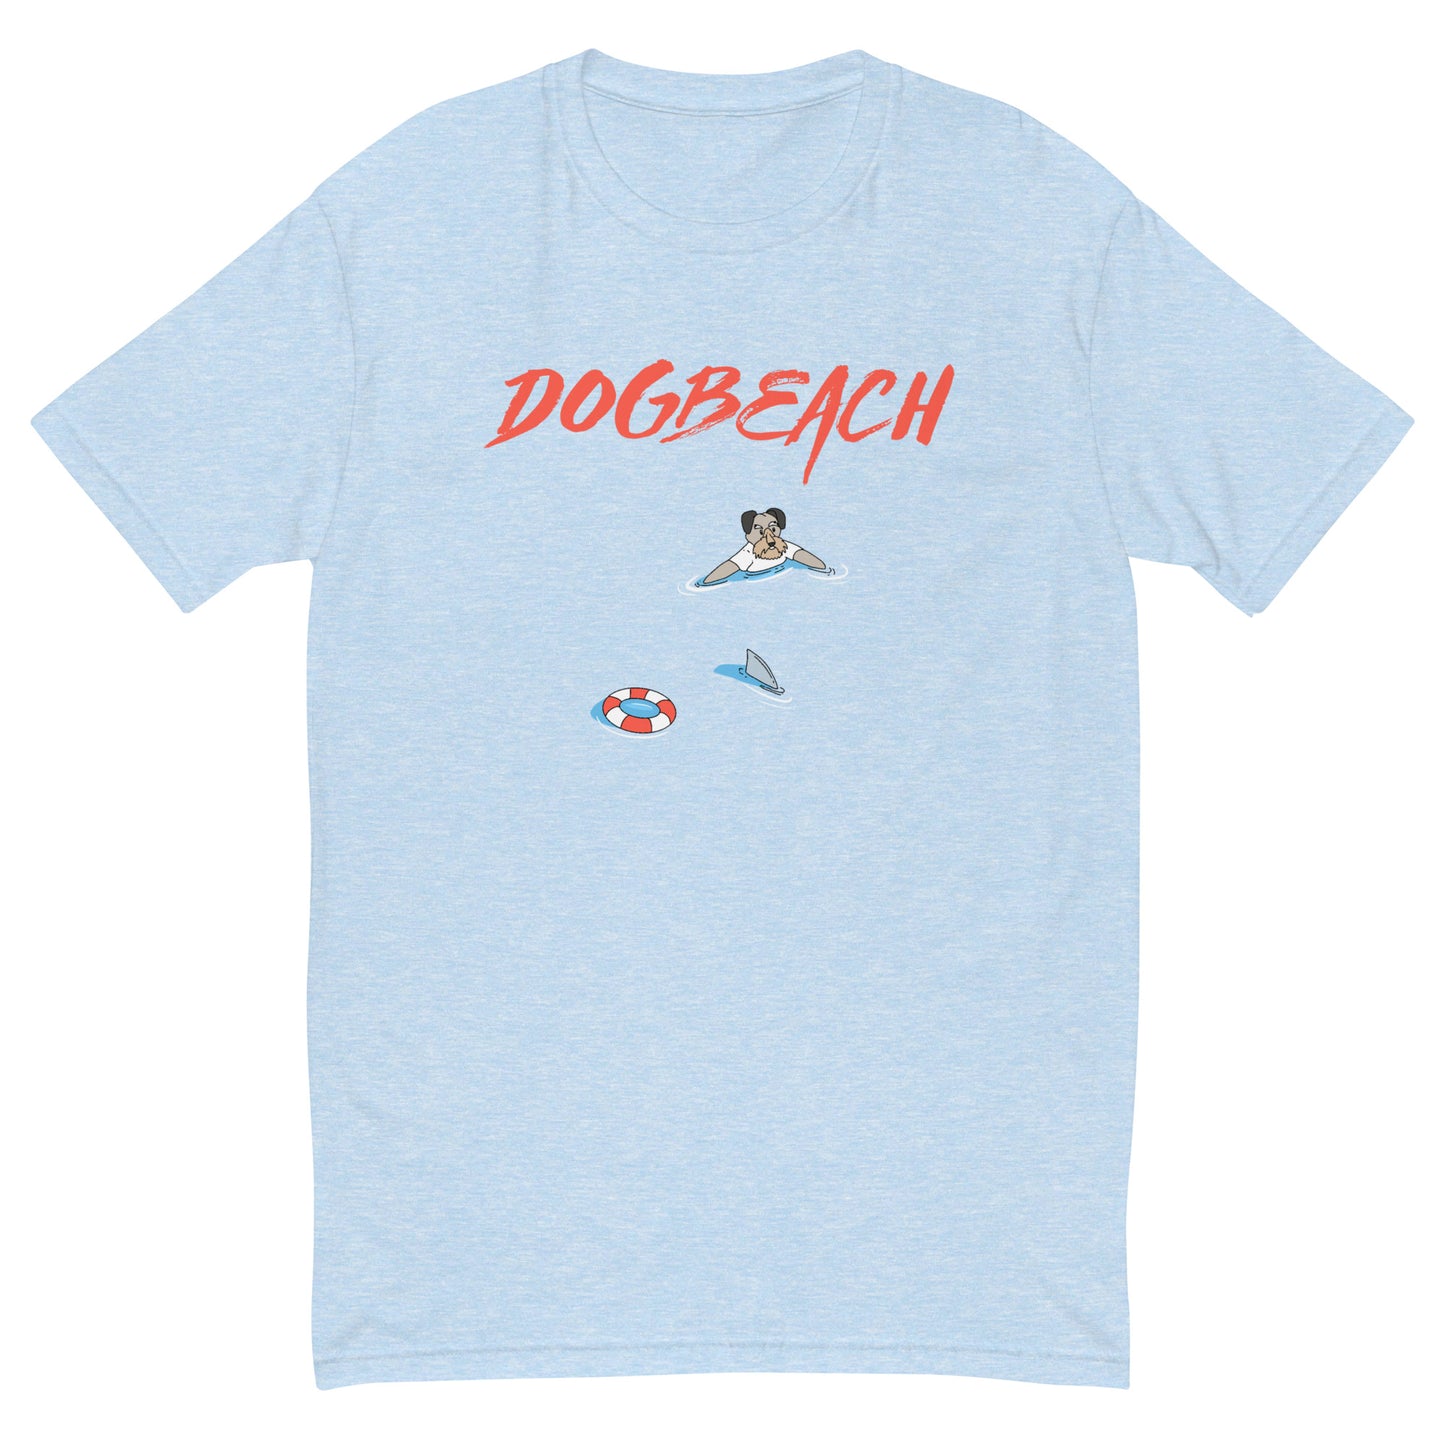 dogbeach swim